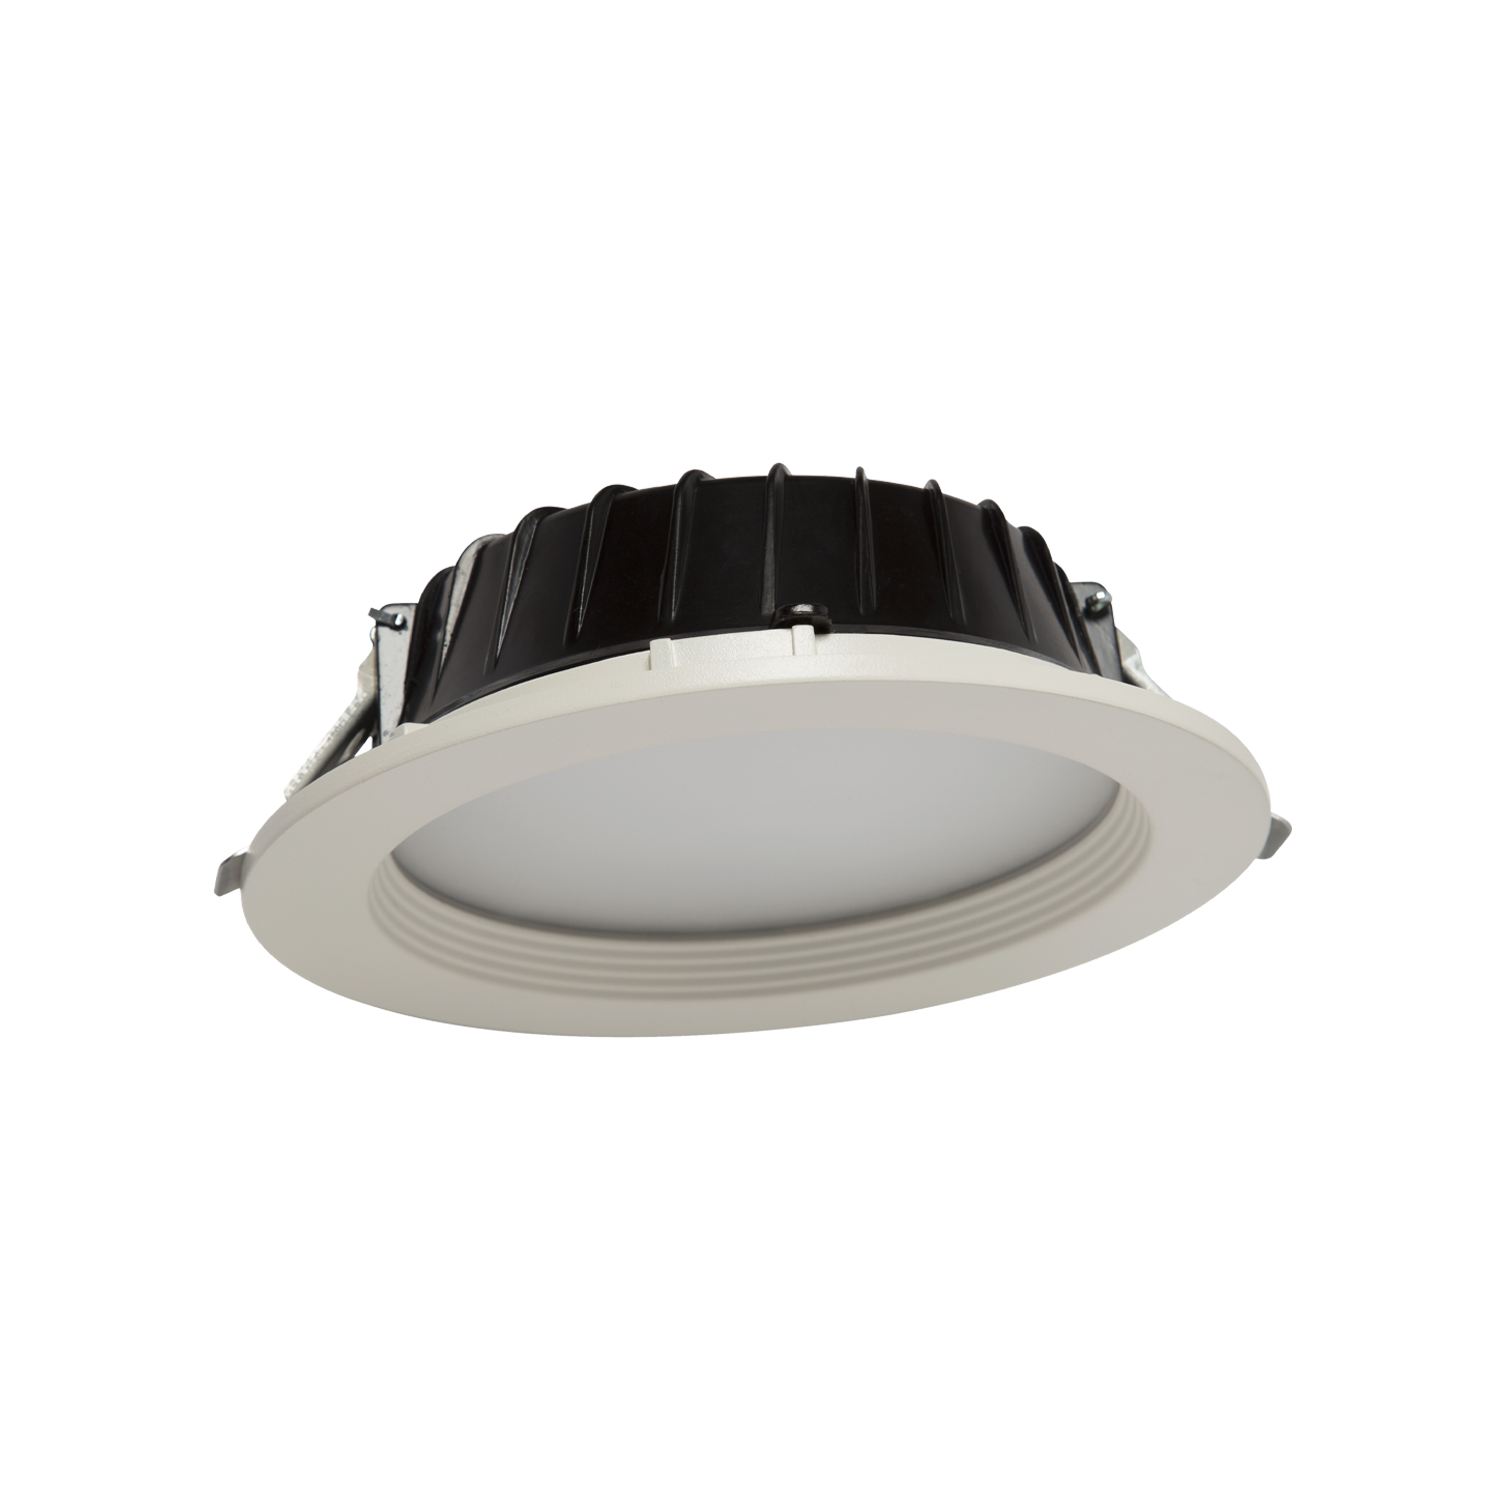 Luminaria LED de empotrar en techo blanco 15 W 100-277 V~ 4 000 K, TL-4441.B40